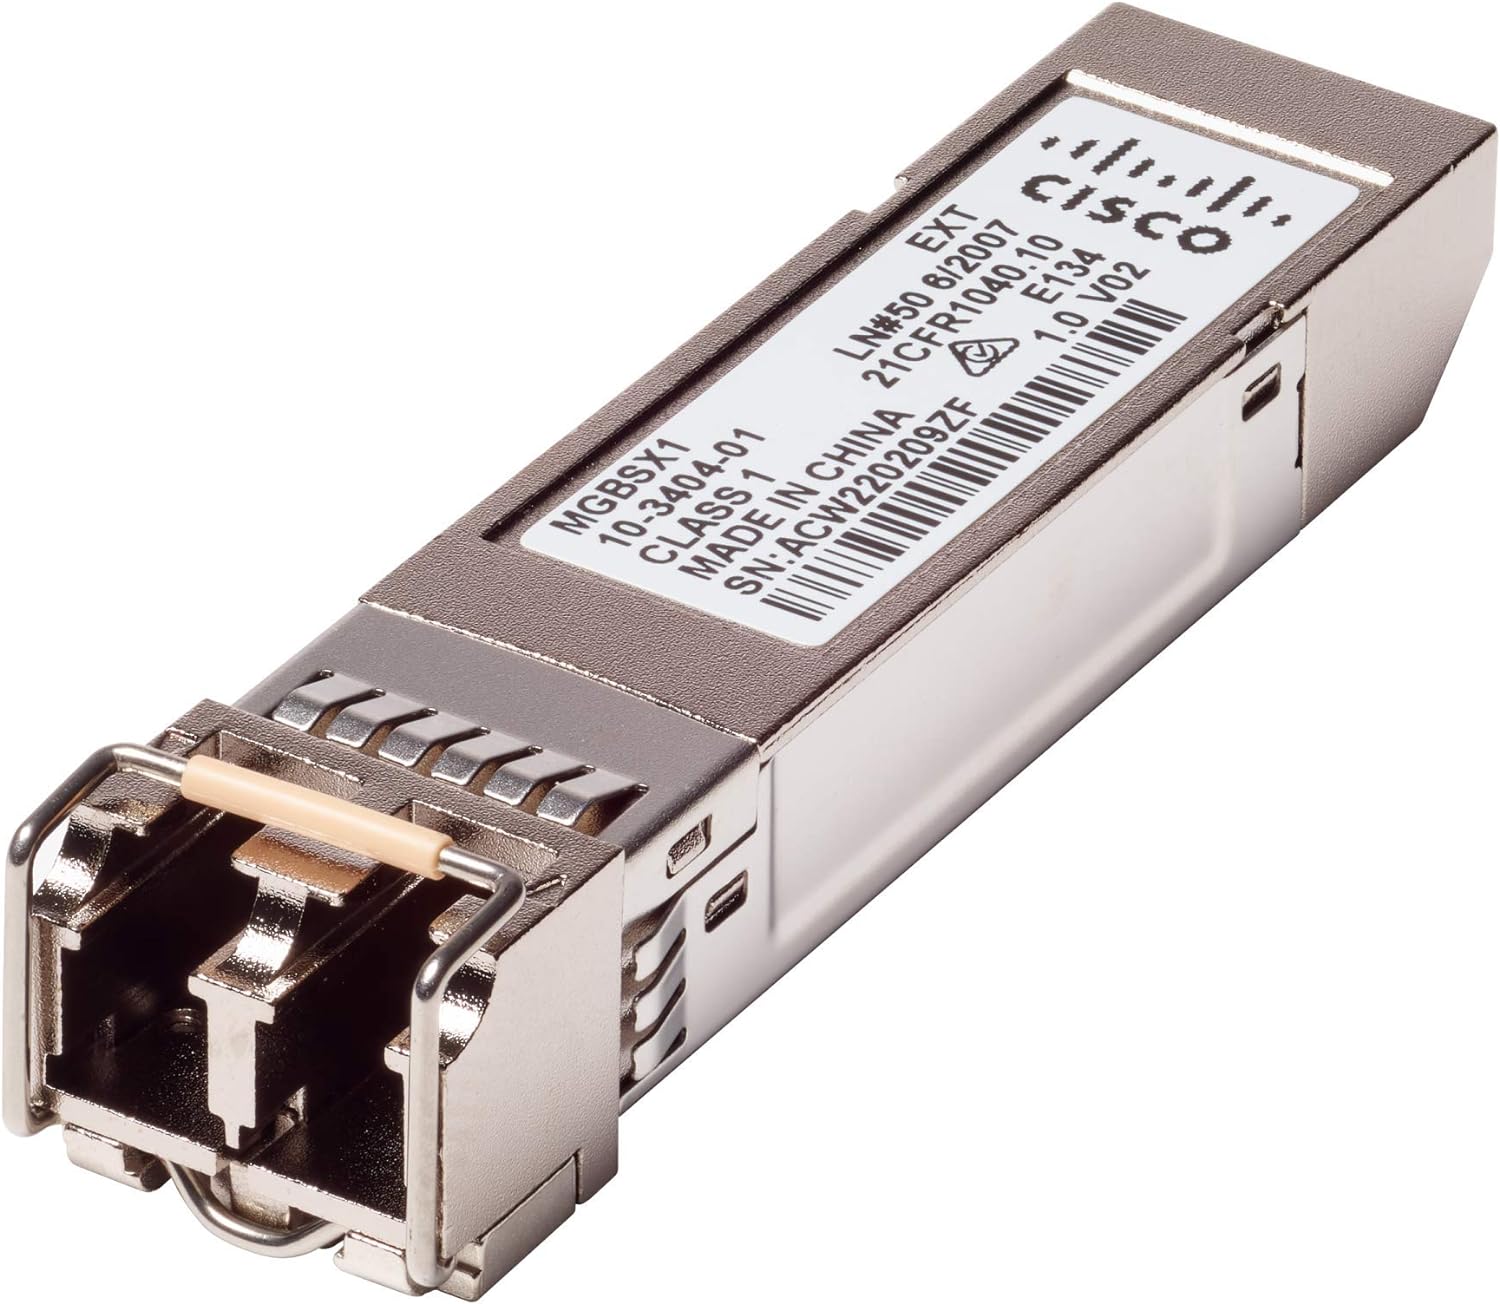 Cisco MGBSX1 1000BASE-SX SFP transceiver for multimode fiber 850 nm wavelength support